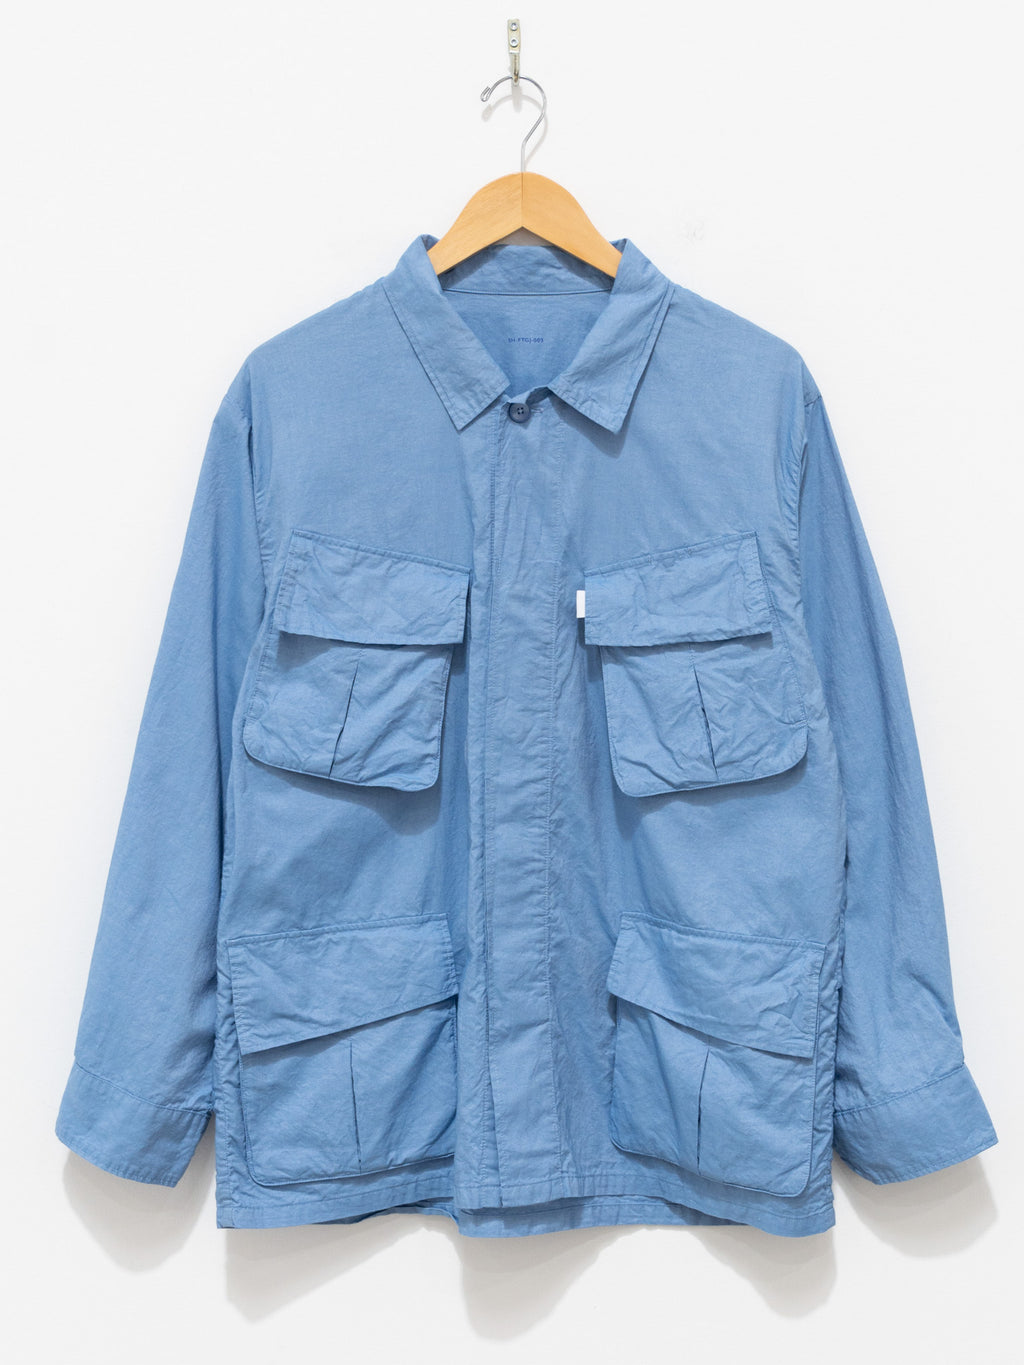 Namu Shop - S H Fatigue Shirt - Chambray Blue